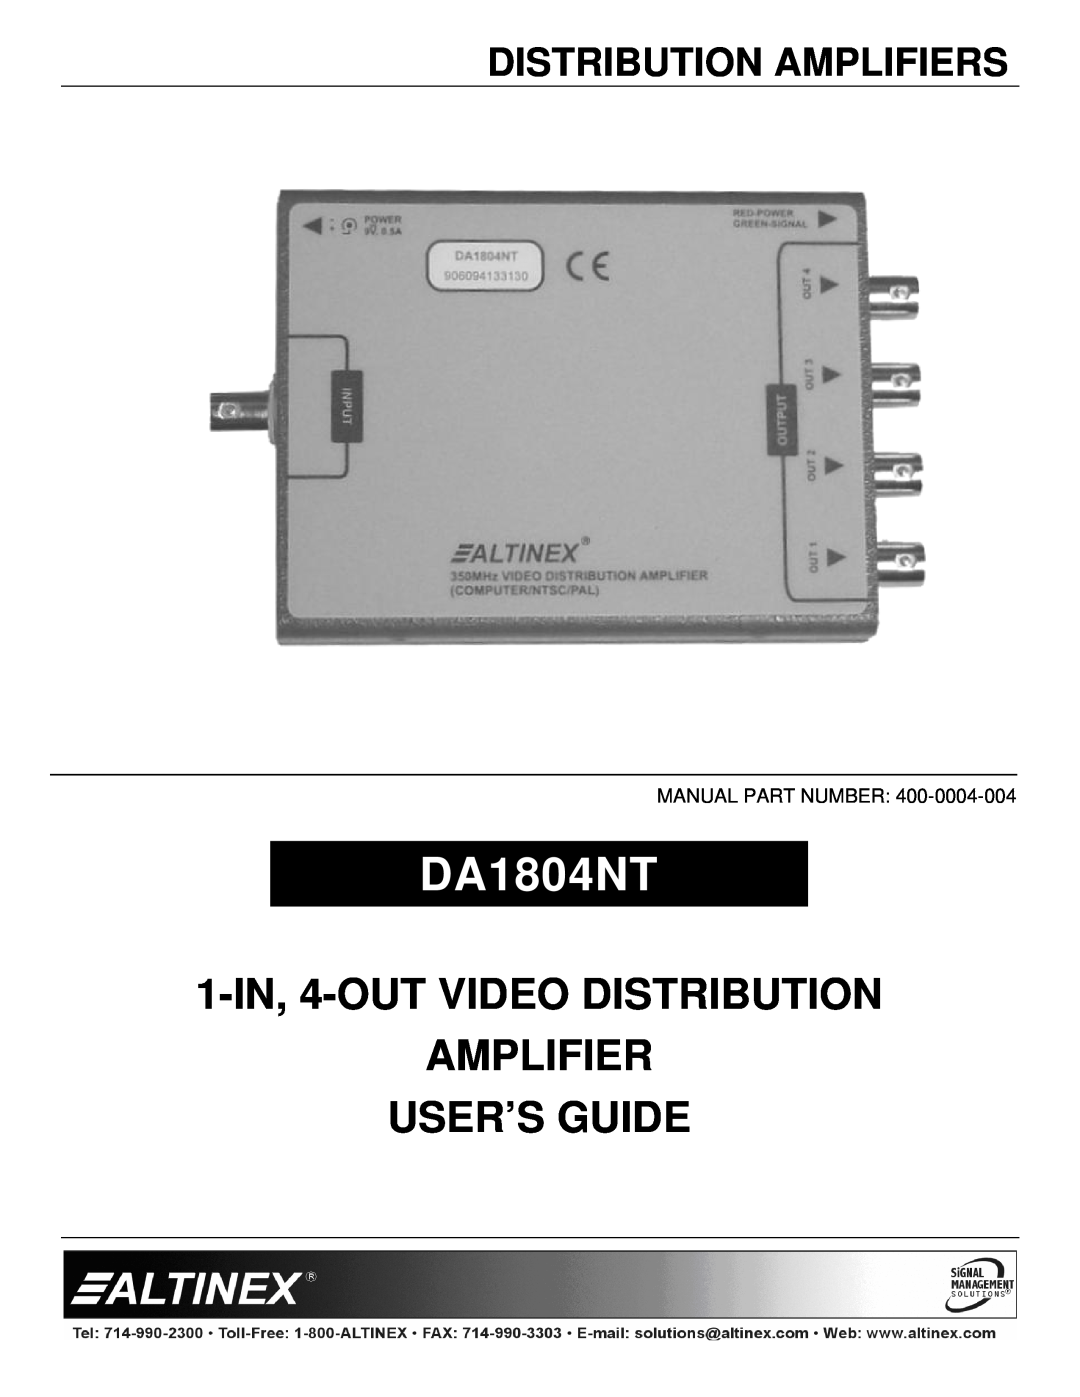 Altinex DA1804NT manual Distribution Amplifiers, 1-IN, 4-OUTVIDEO DISTRIBUTION AMPLIFIER, User’S Guide 